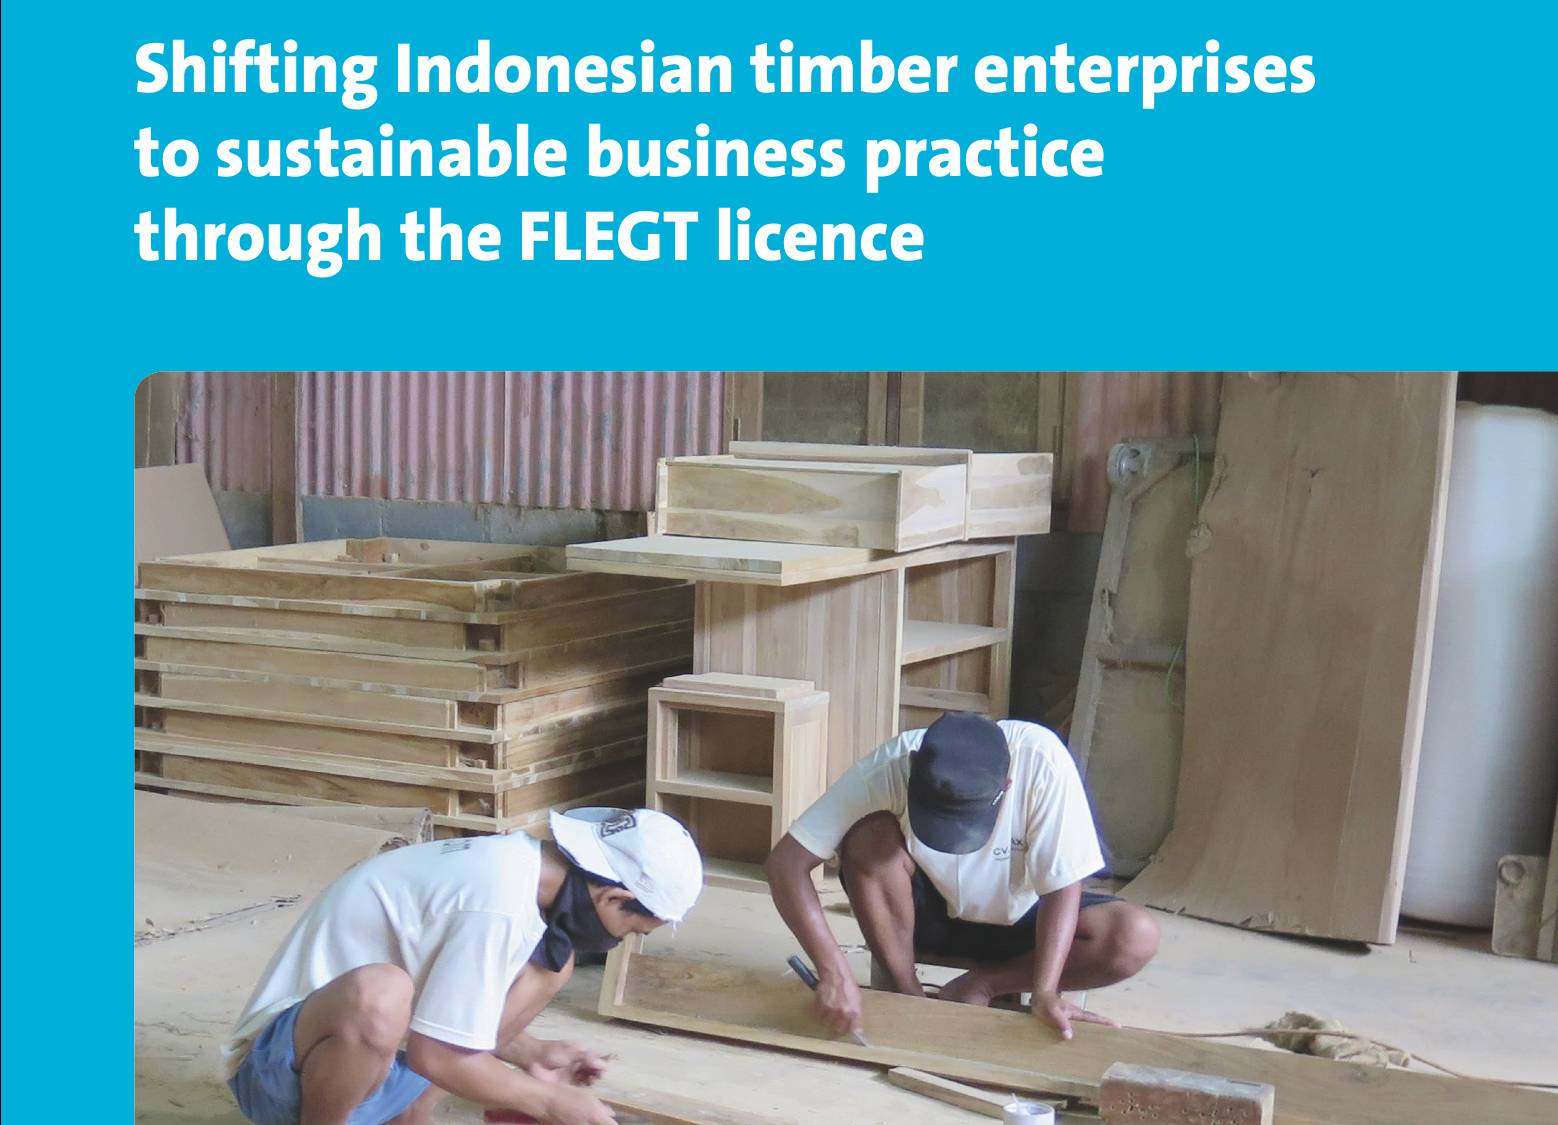 Impact Sheet: Timber Indonesia